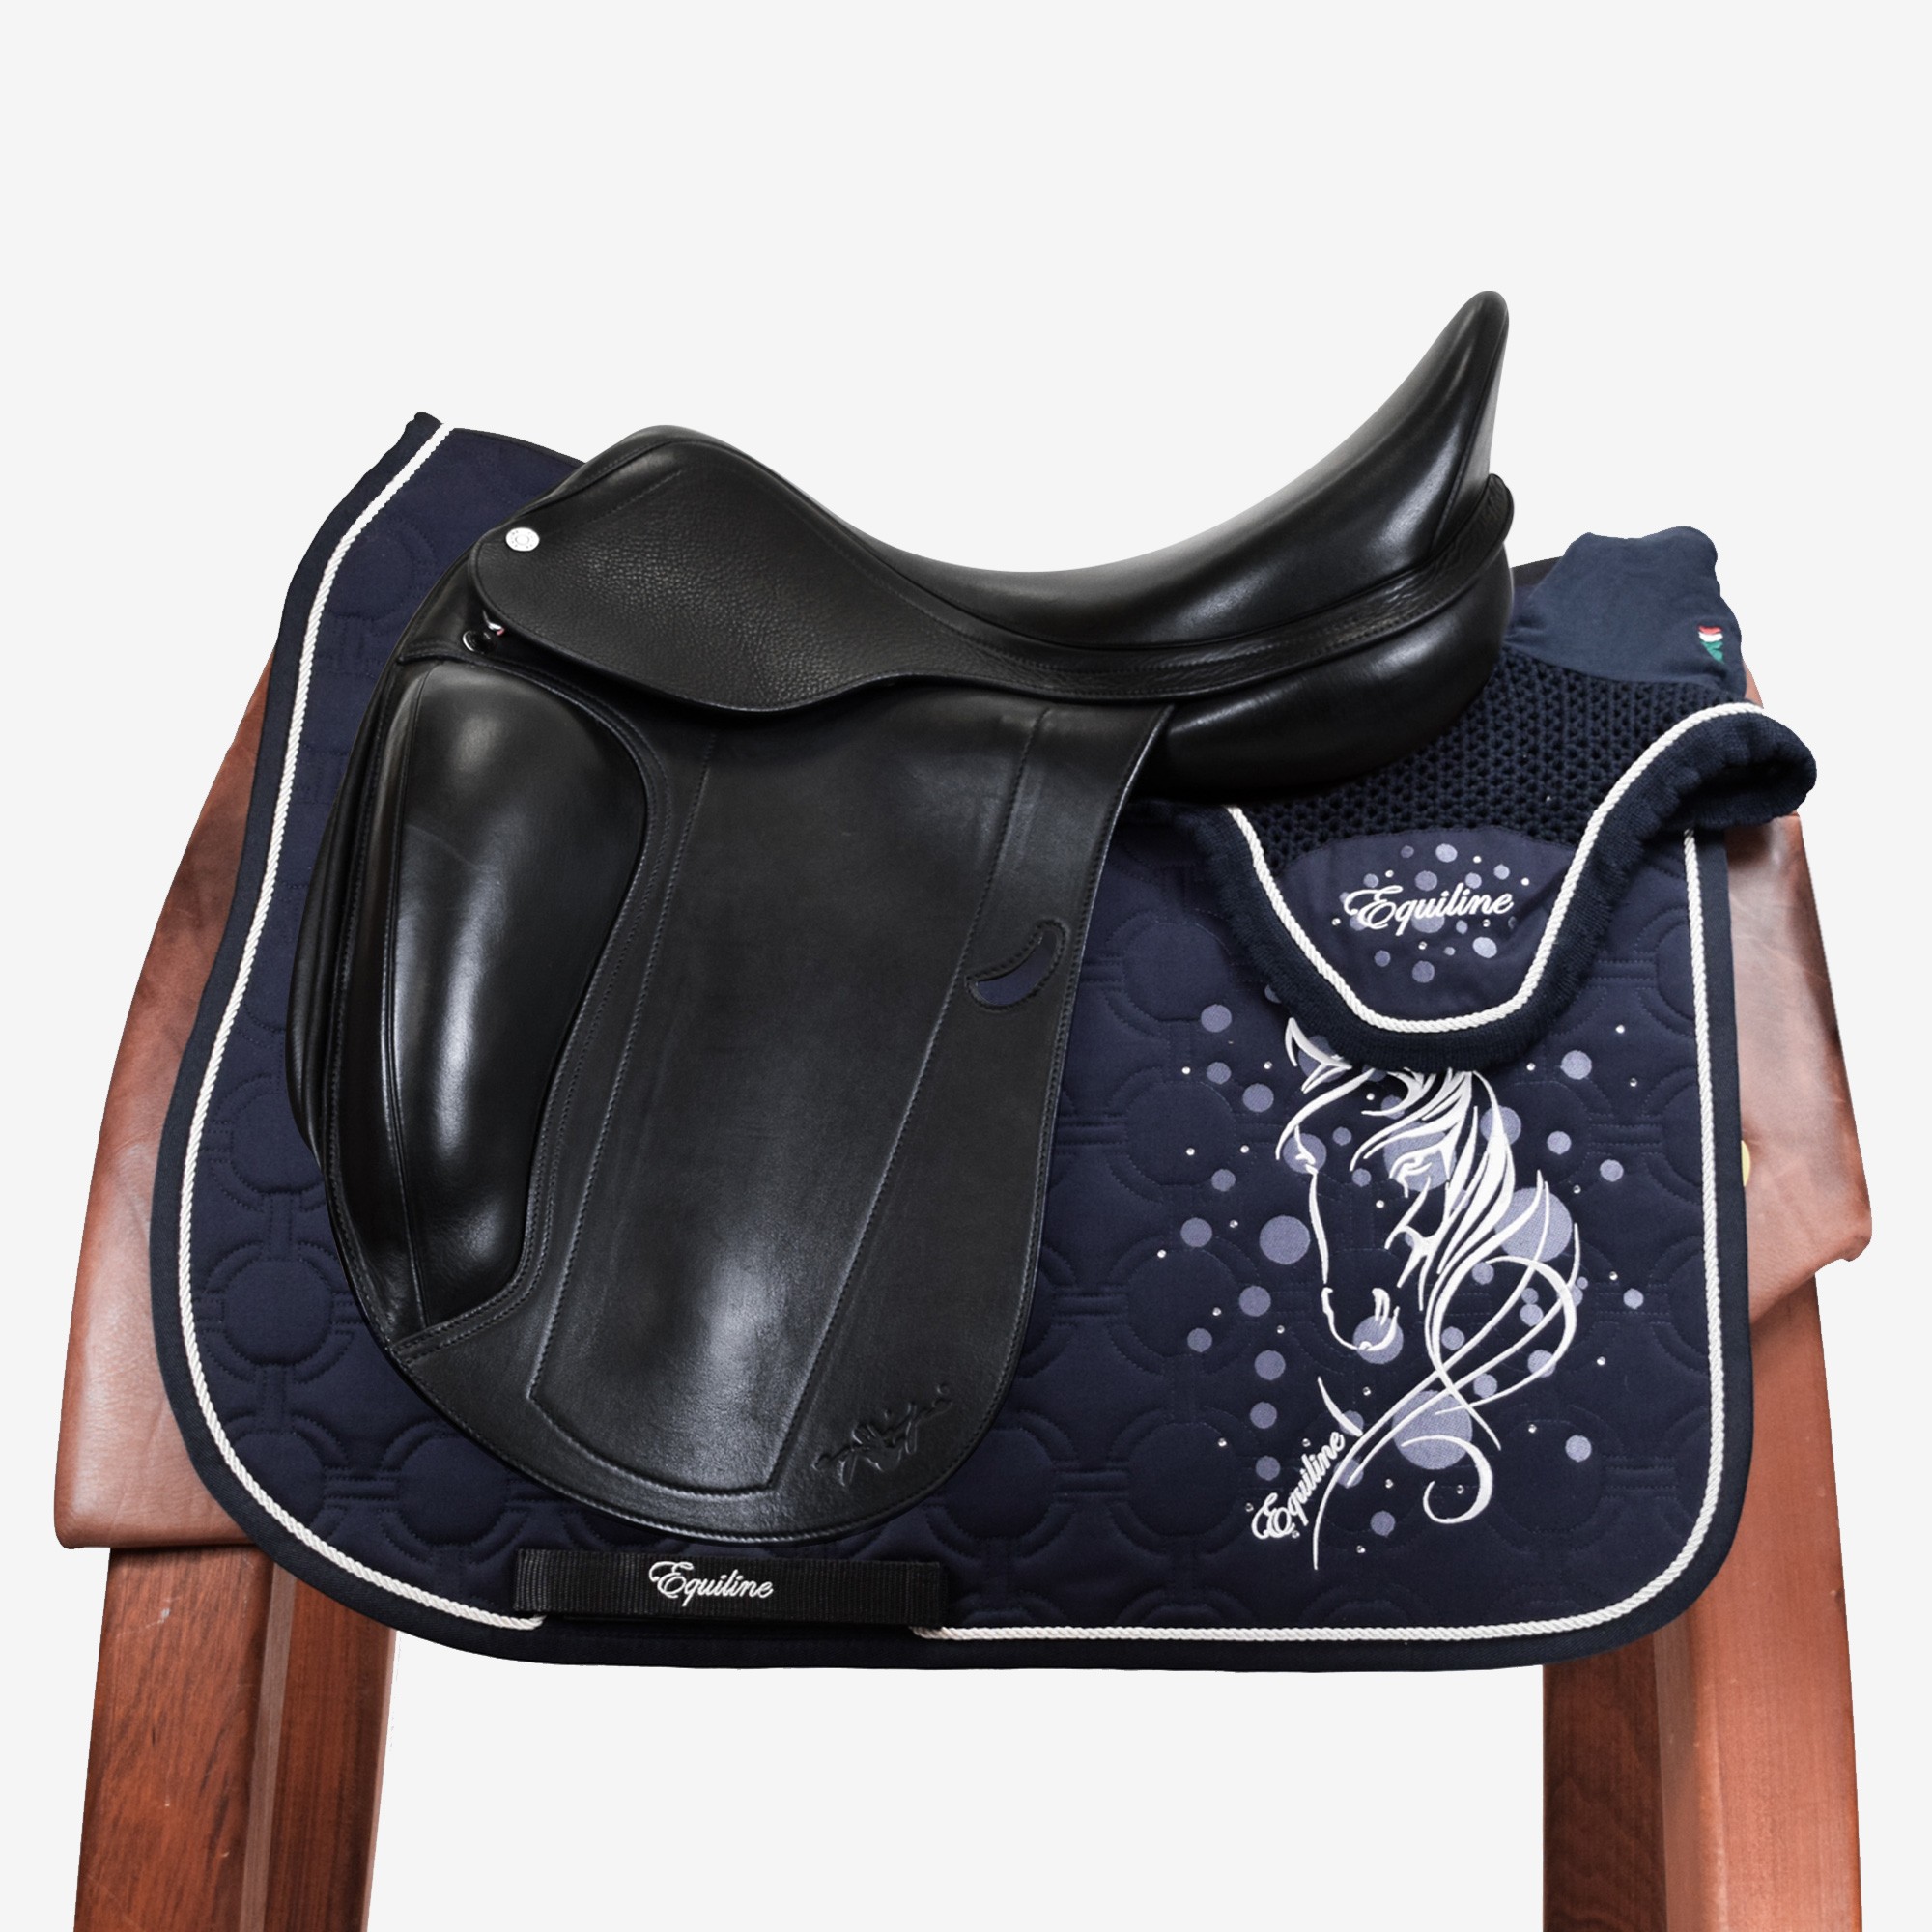 Sottosella dressage Equiline con cavallo - Le Selle - shop online